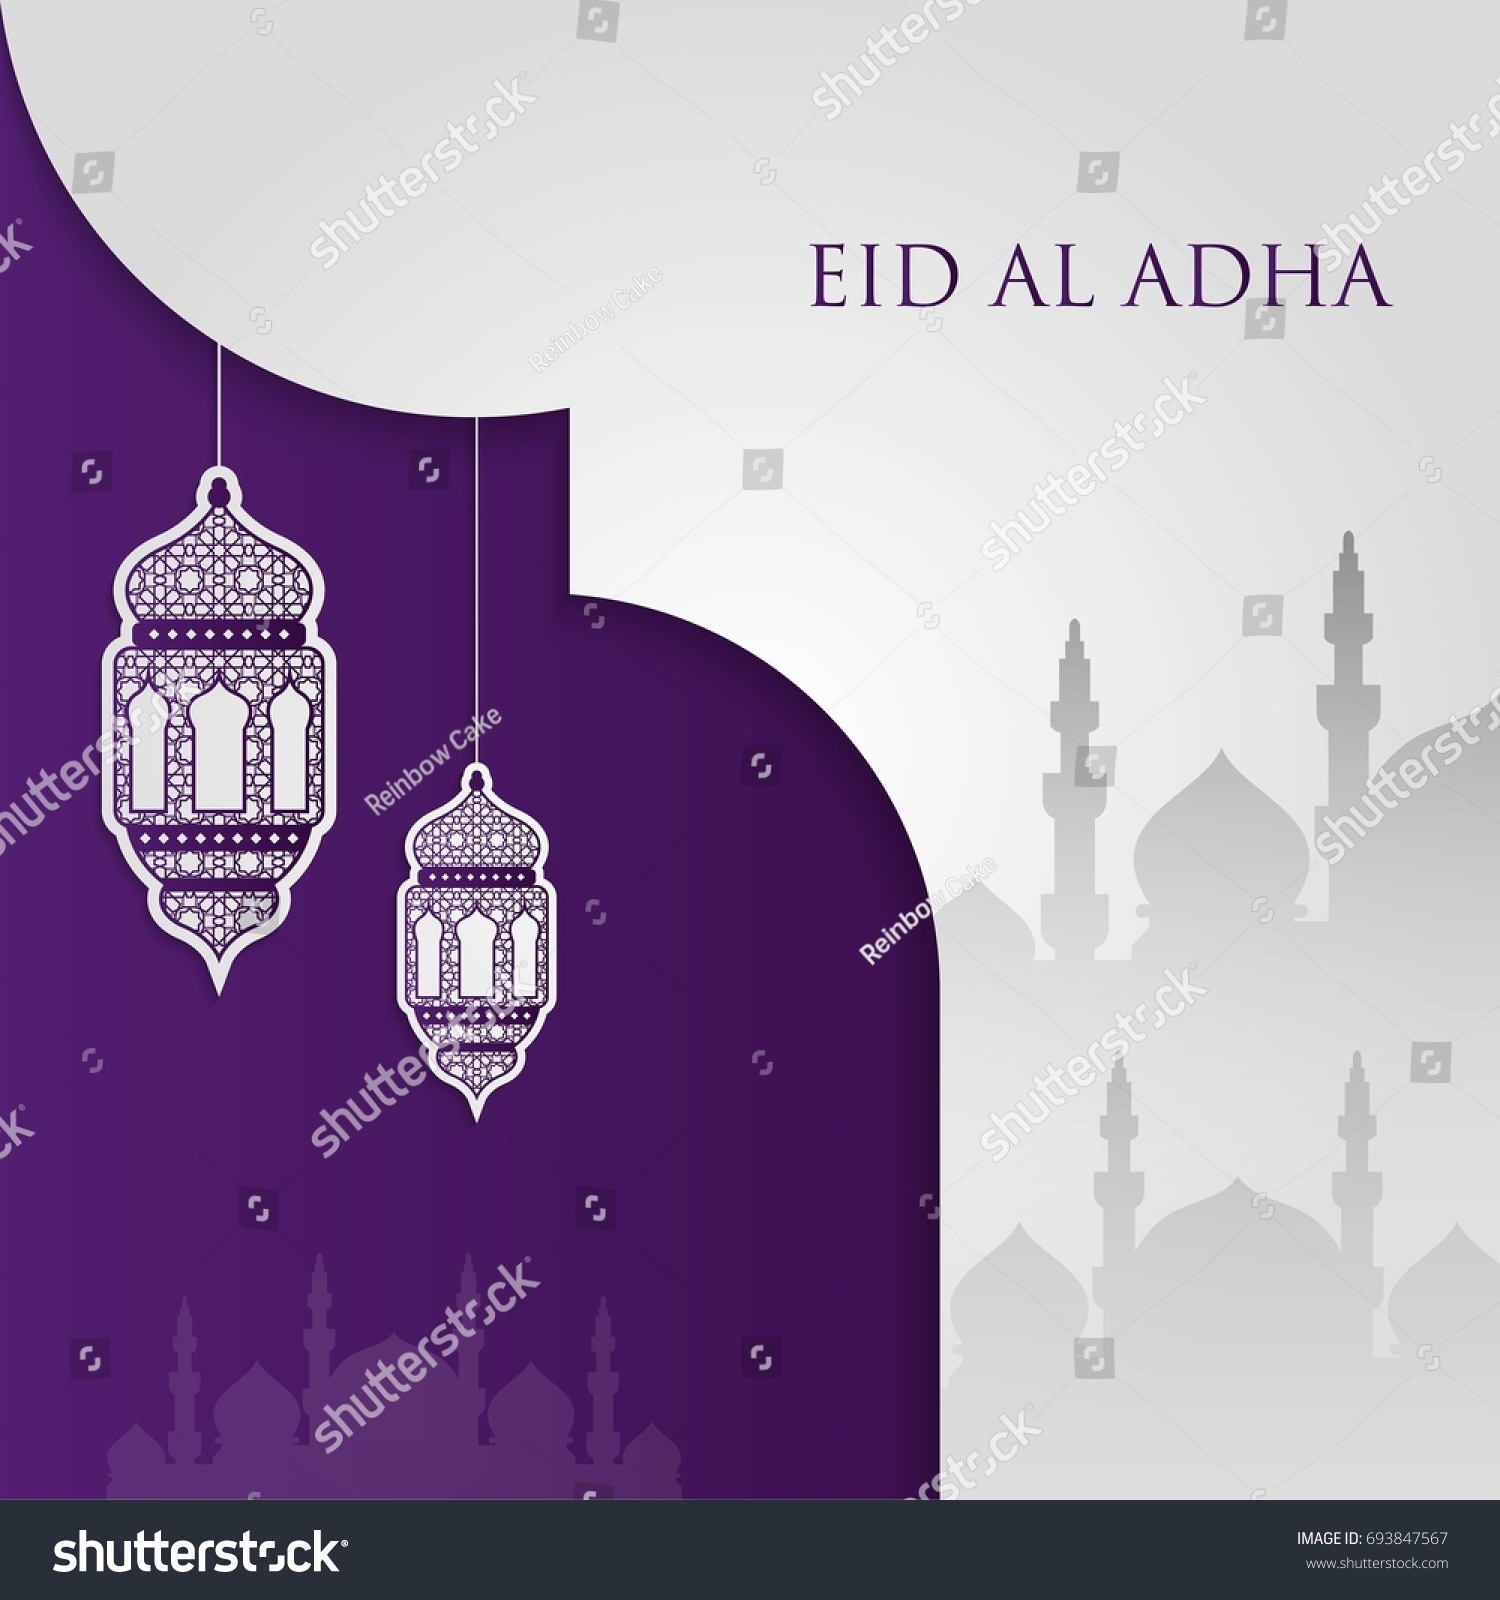 Eid Mubarak Eid Al Adha Template Stock Vector Royalty Free 693847567